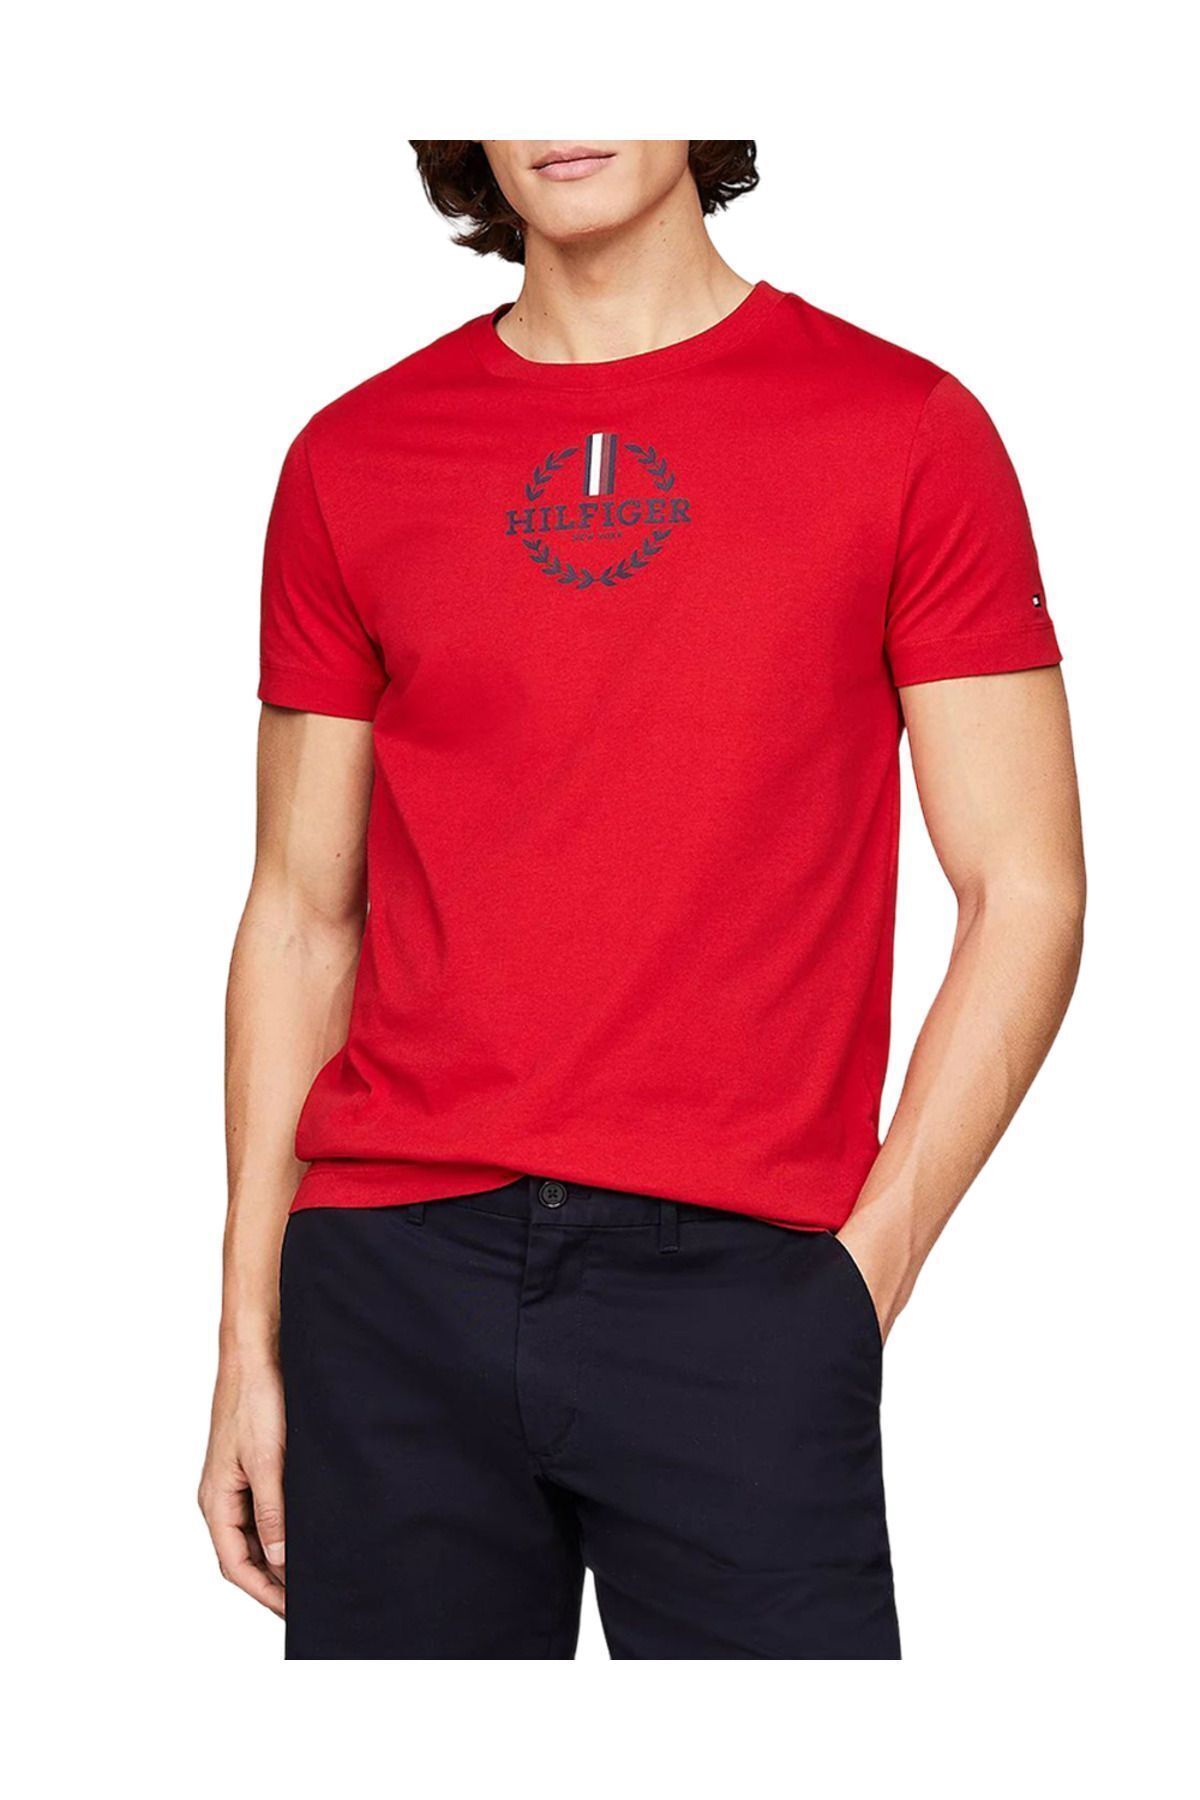 Tommy Hilfiger Erkek Pamuklu Kısa Kollu Yuvarlak Yaka Kırmızı T-Shirt MW0MW34388-XLG